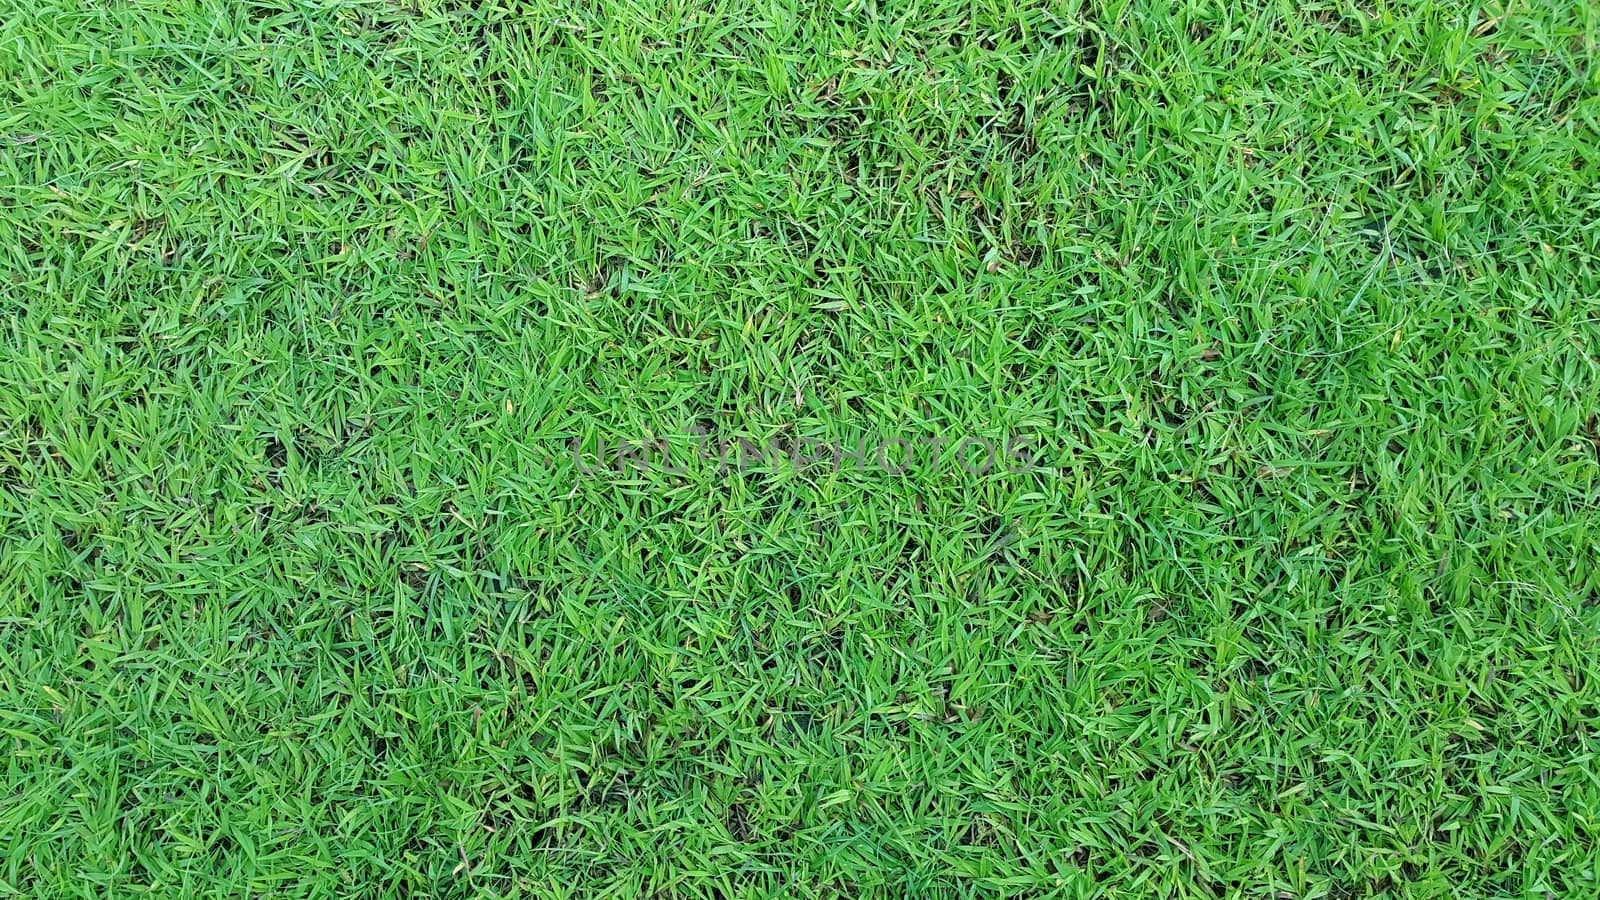 Green Lawn Background by ekachailo